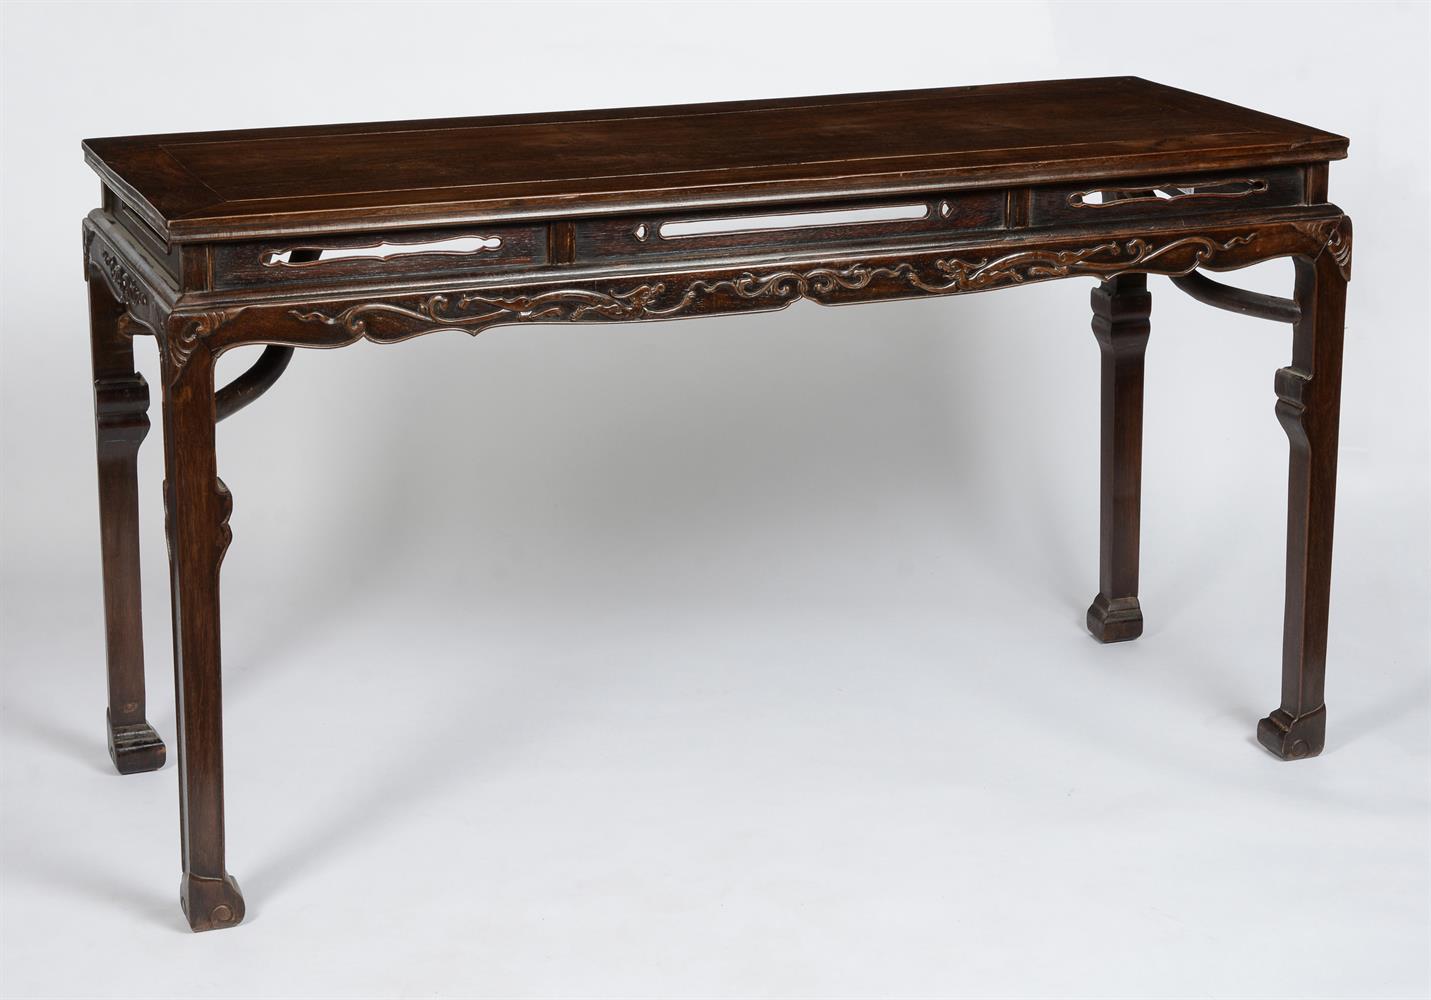 A large Chinese ironwood table - Image 2 of 6